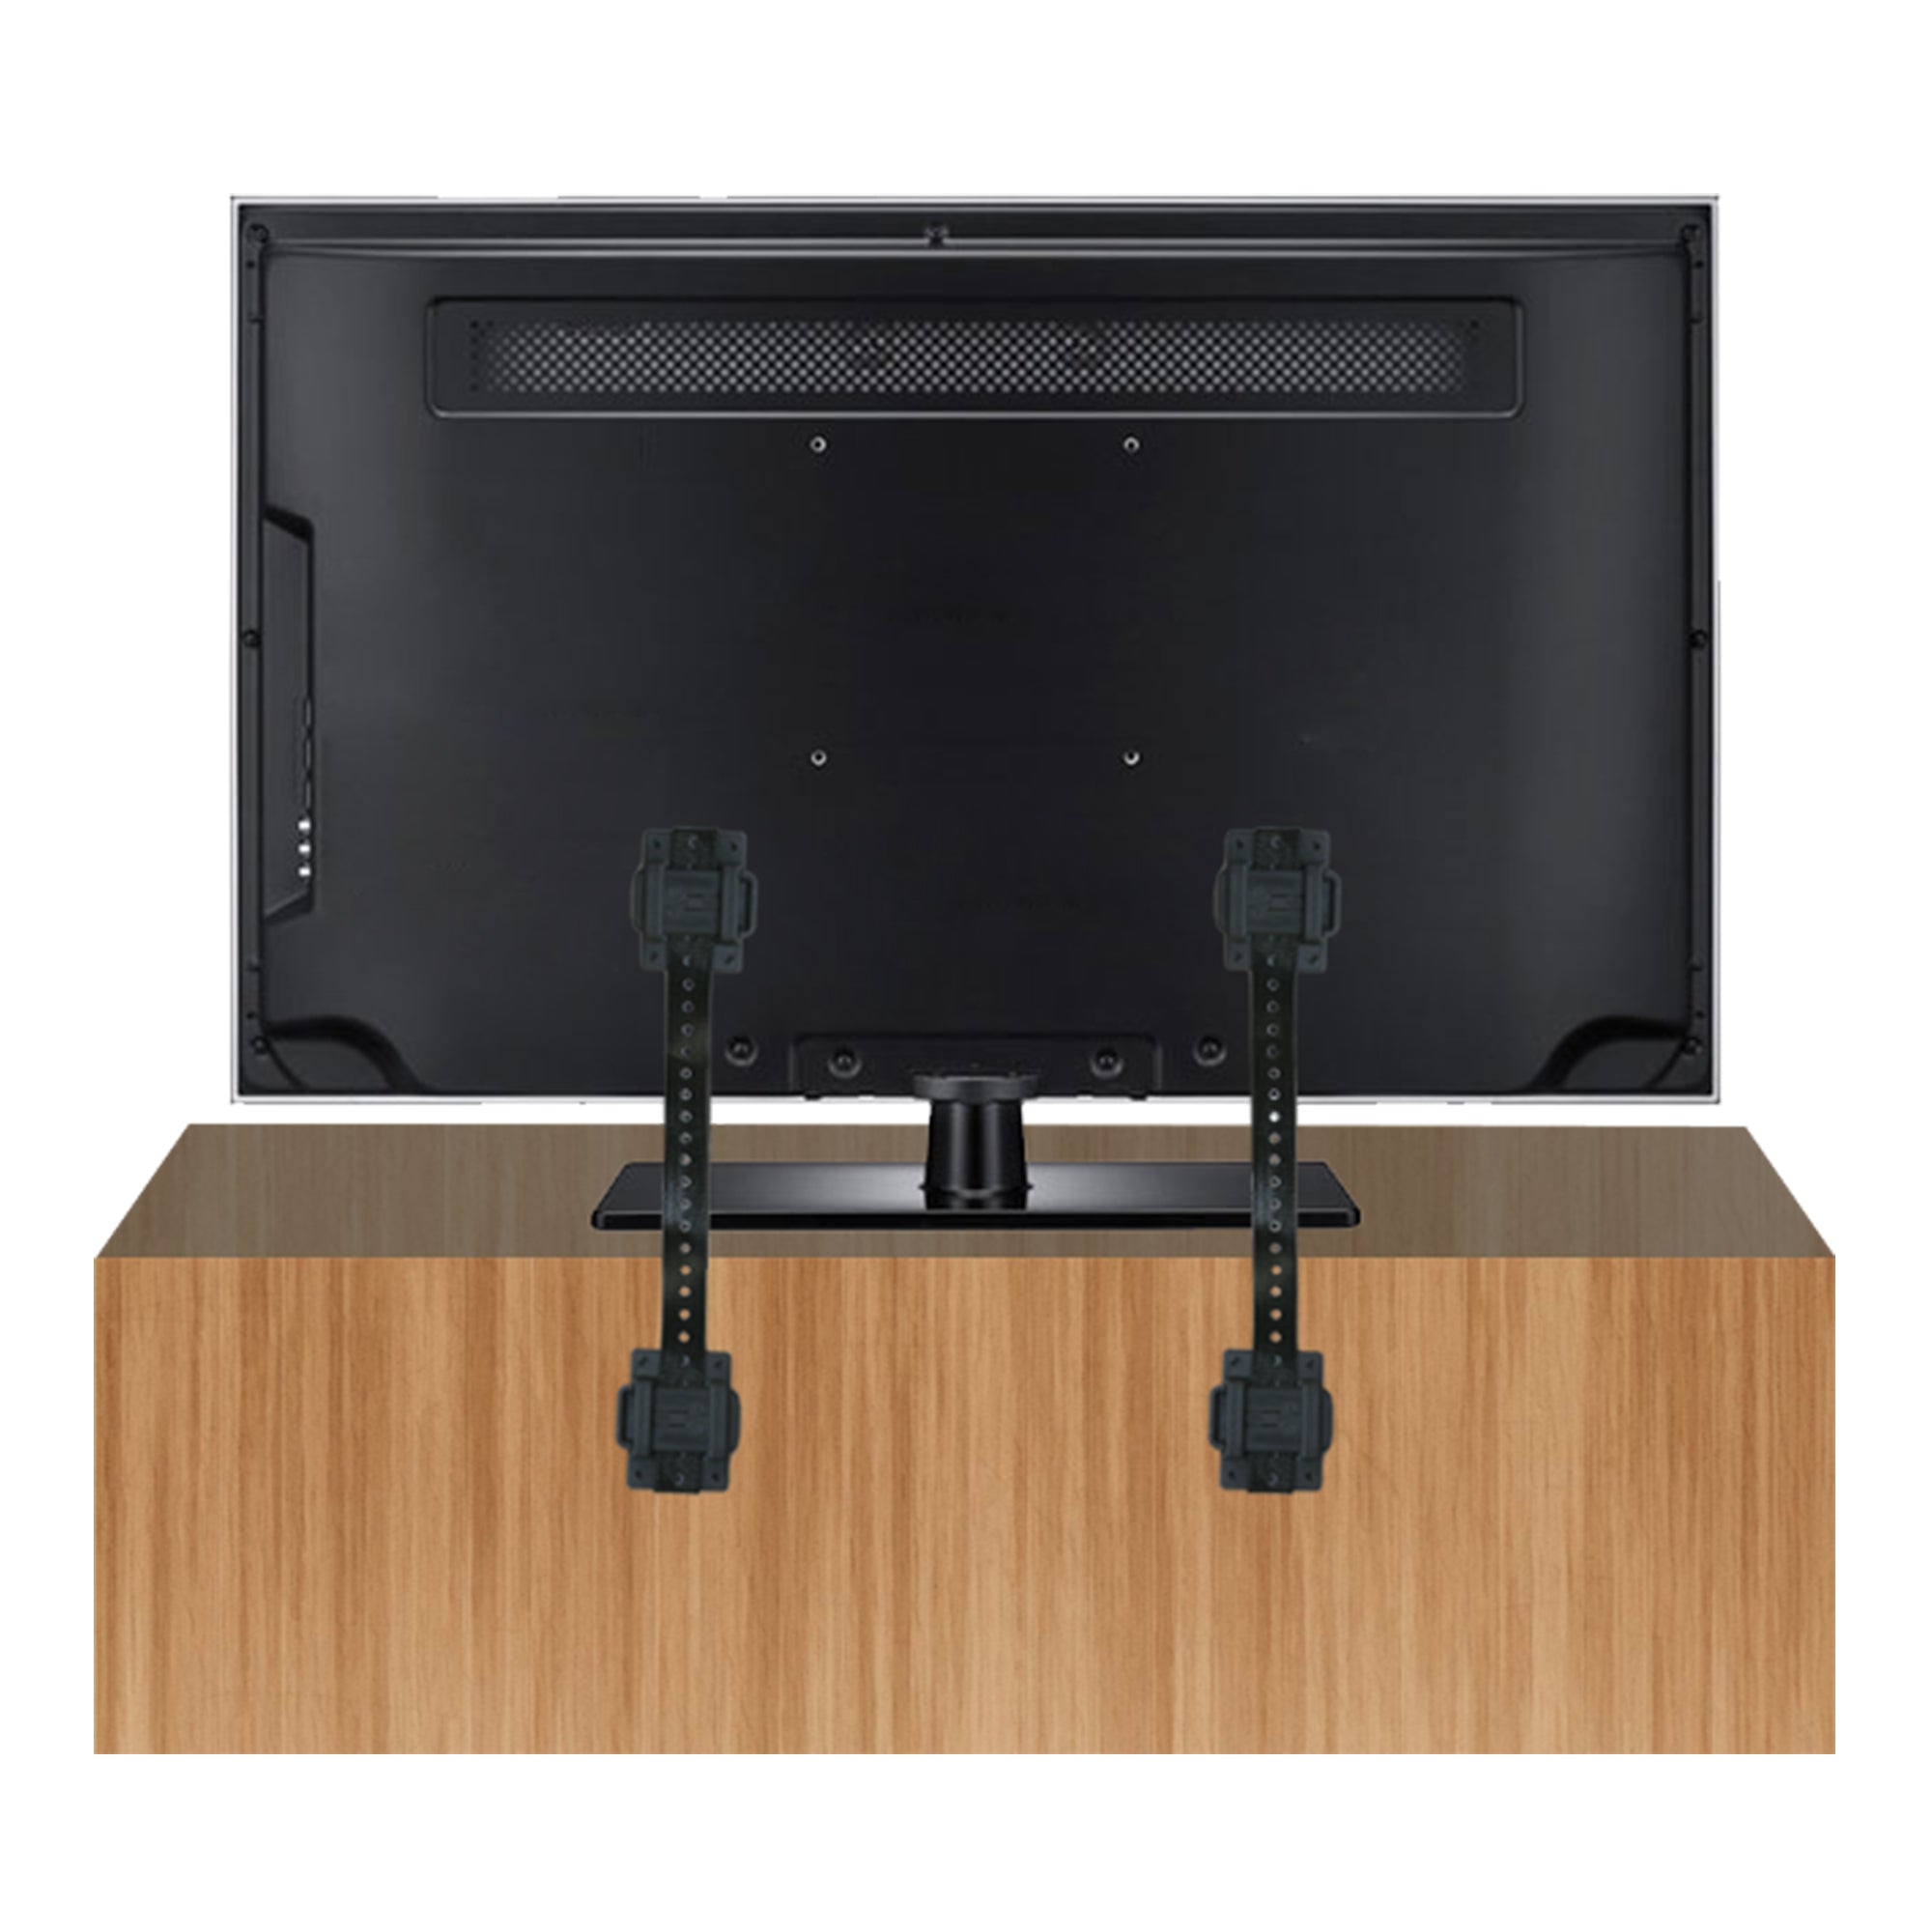 HOLD TIGHT™ Furniture + TV Combo Kit